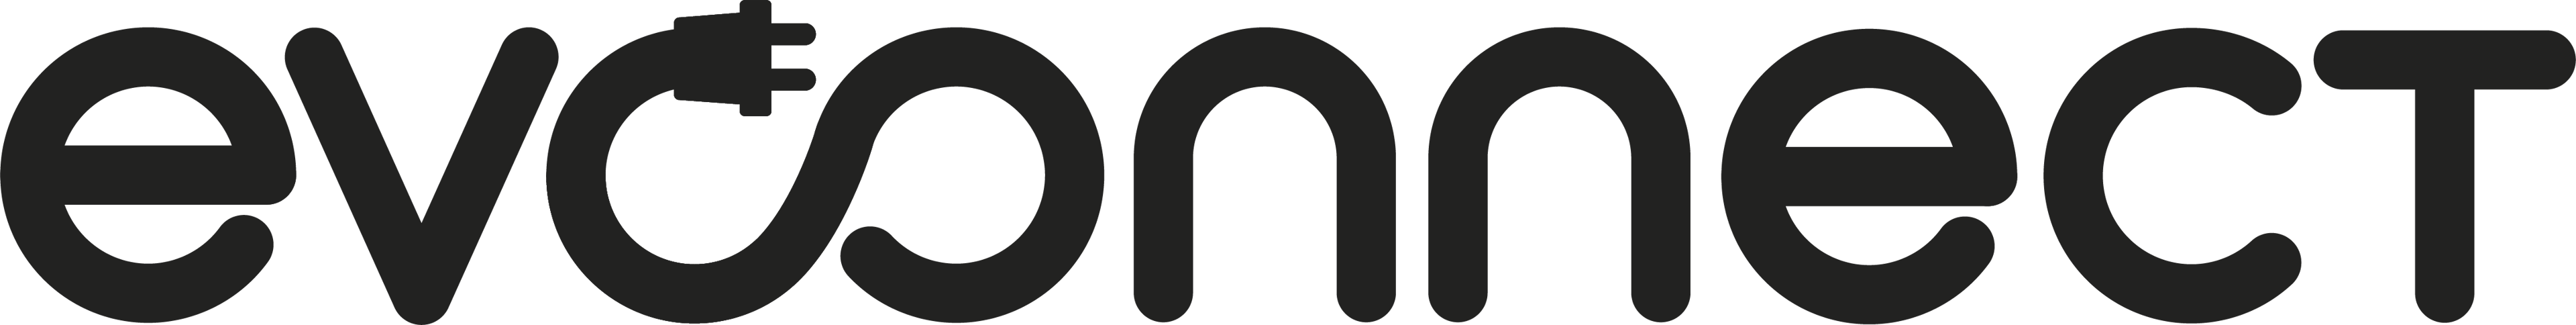 Evconnect logo